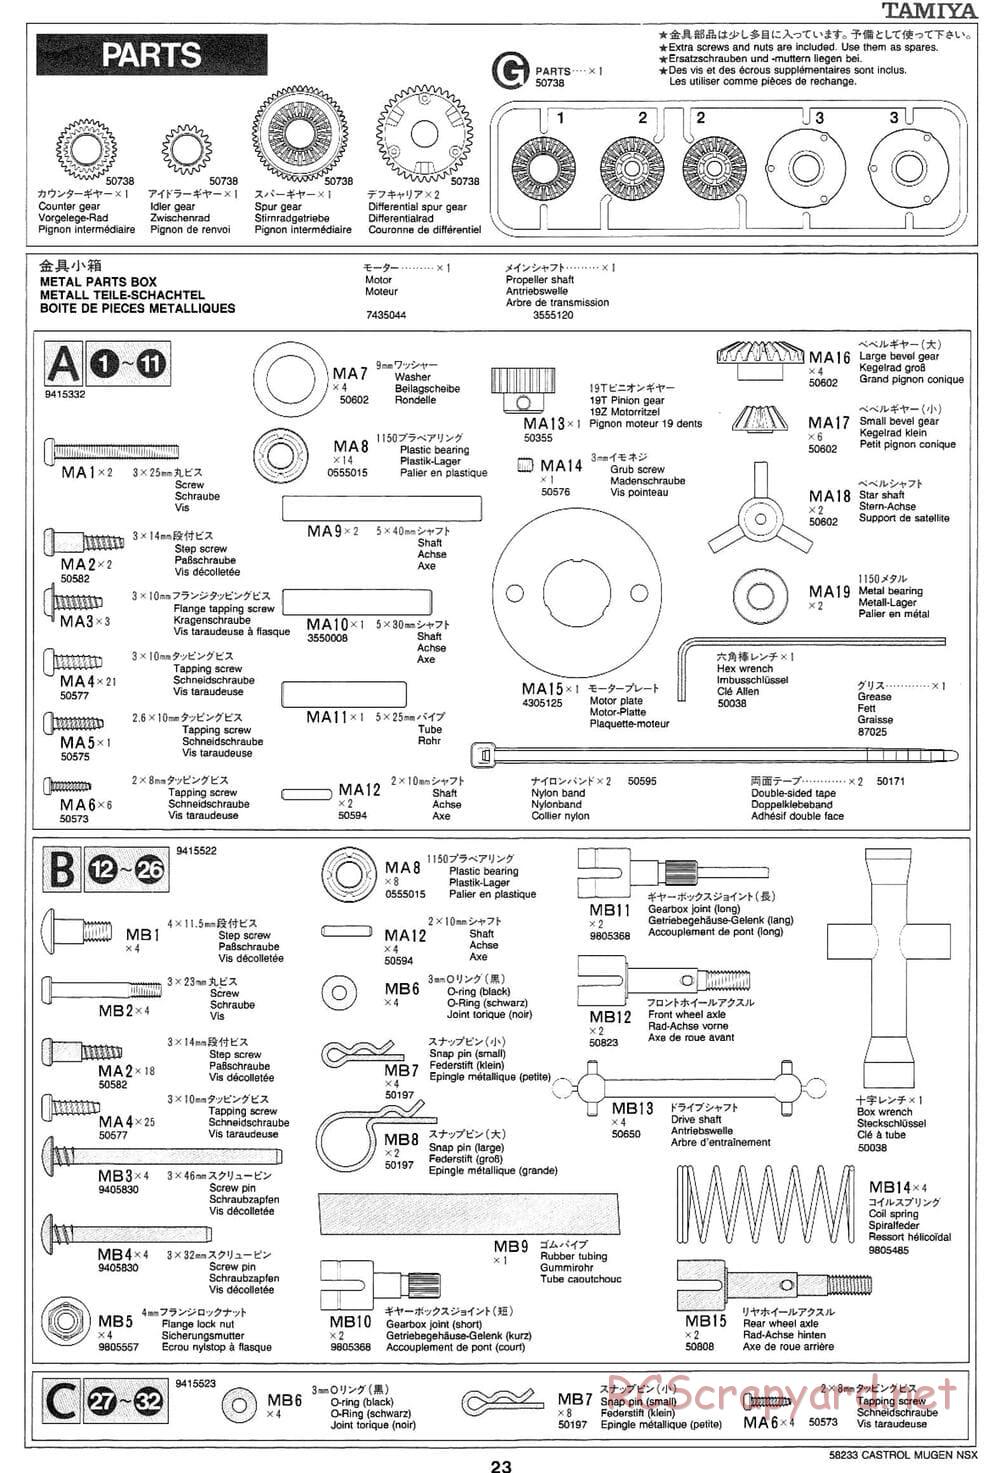 Tamiya - Castrol Mugen NSX - TL-01 Chassis - Manual - Page 23